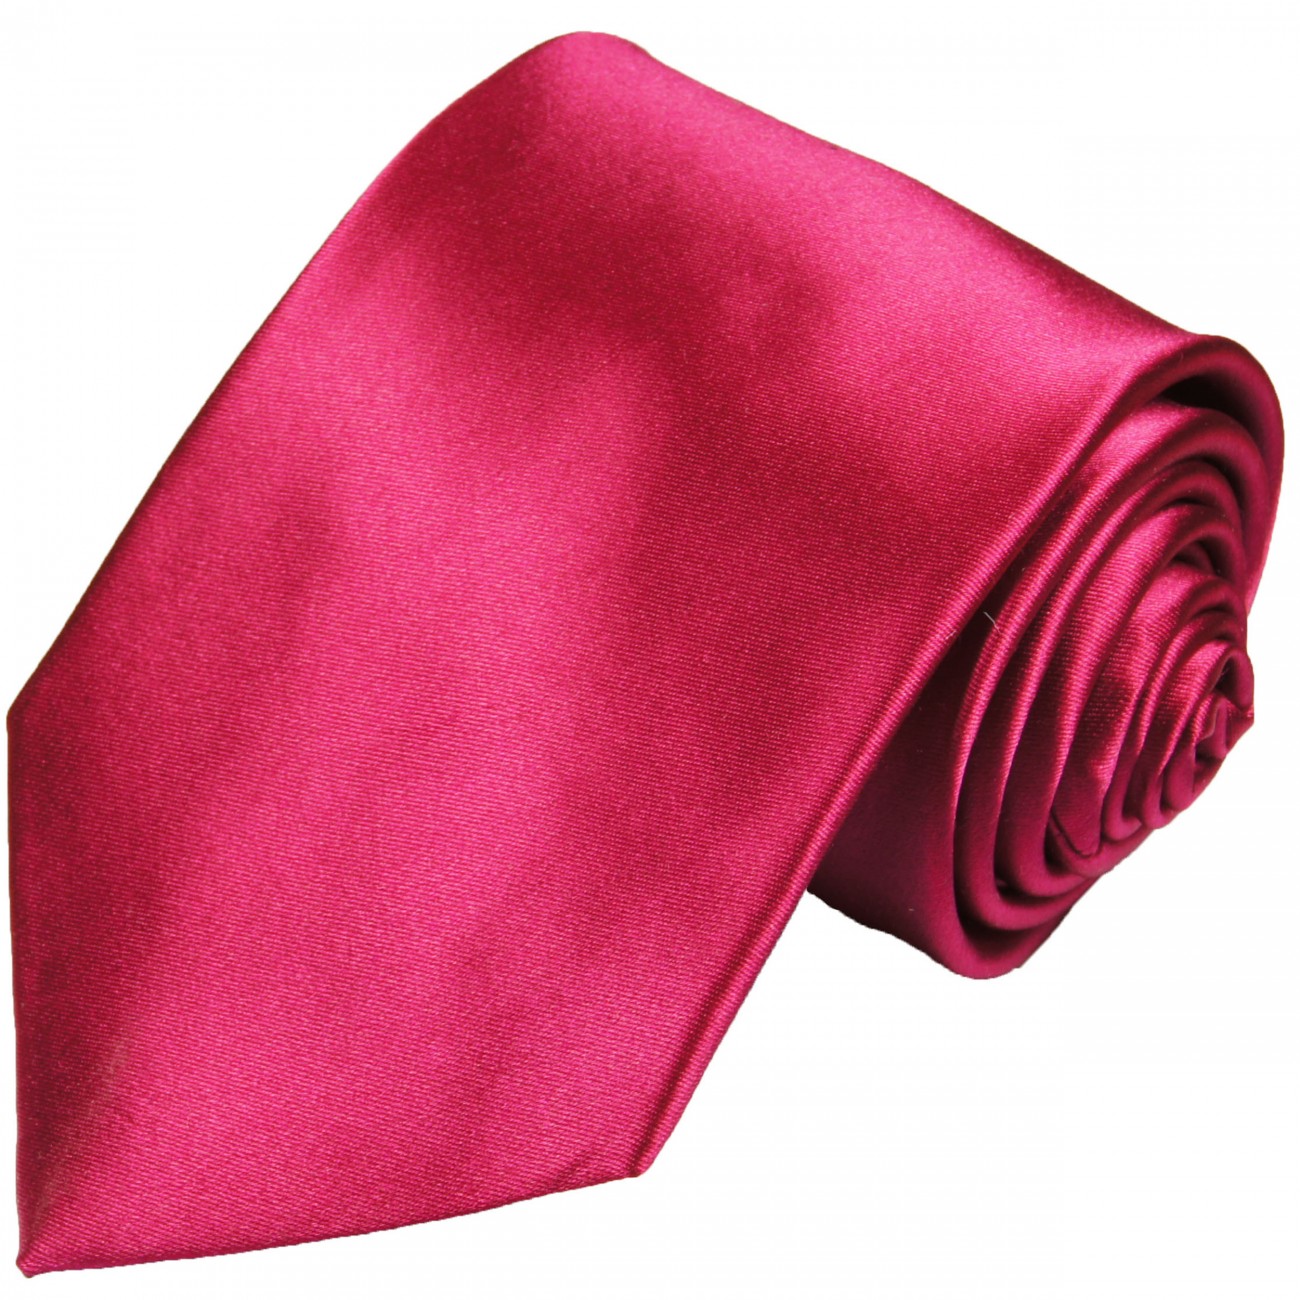 Extra lange Krawatte 165cm - Krawatte Überlänge - pink beere uni